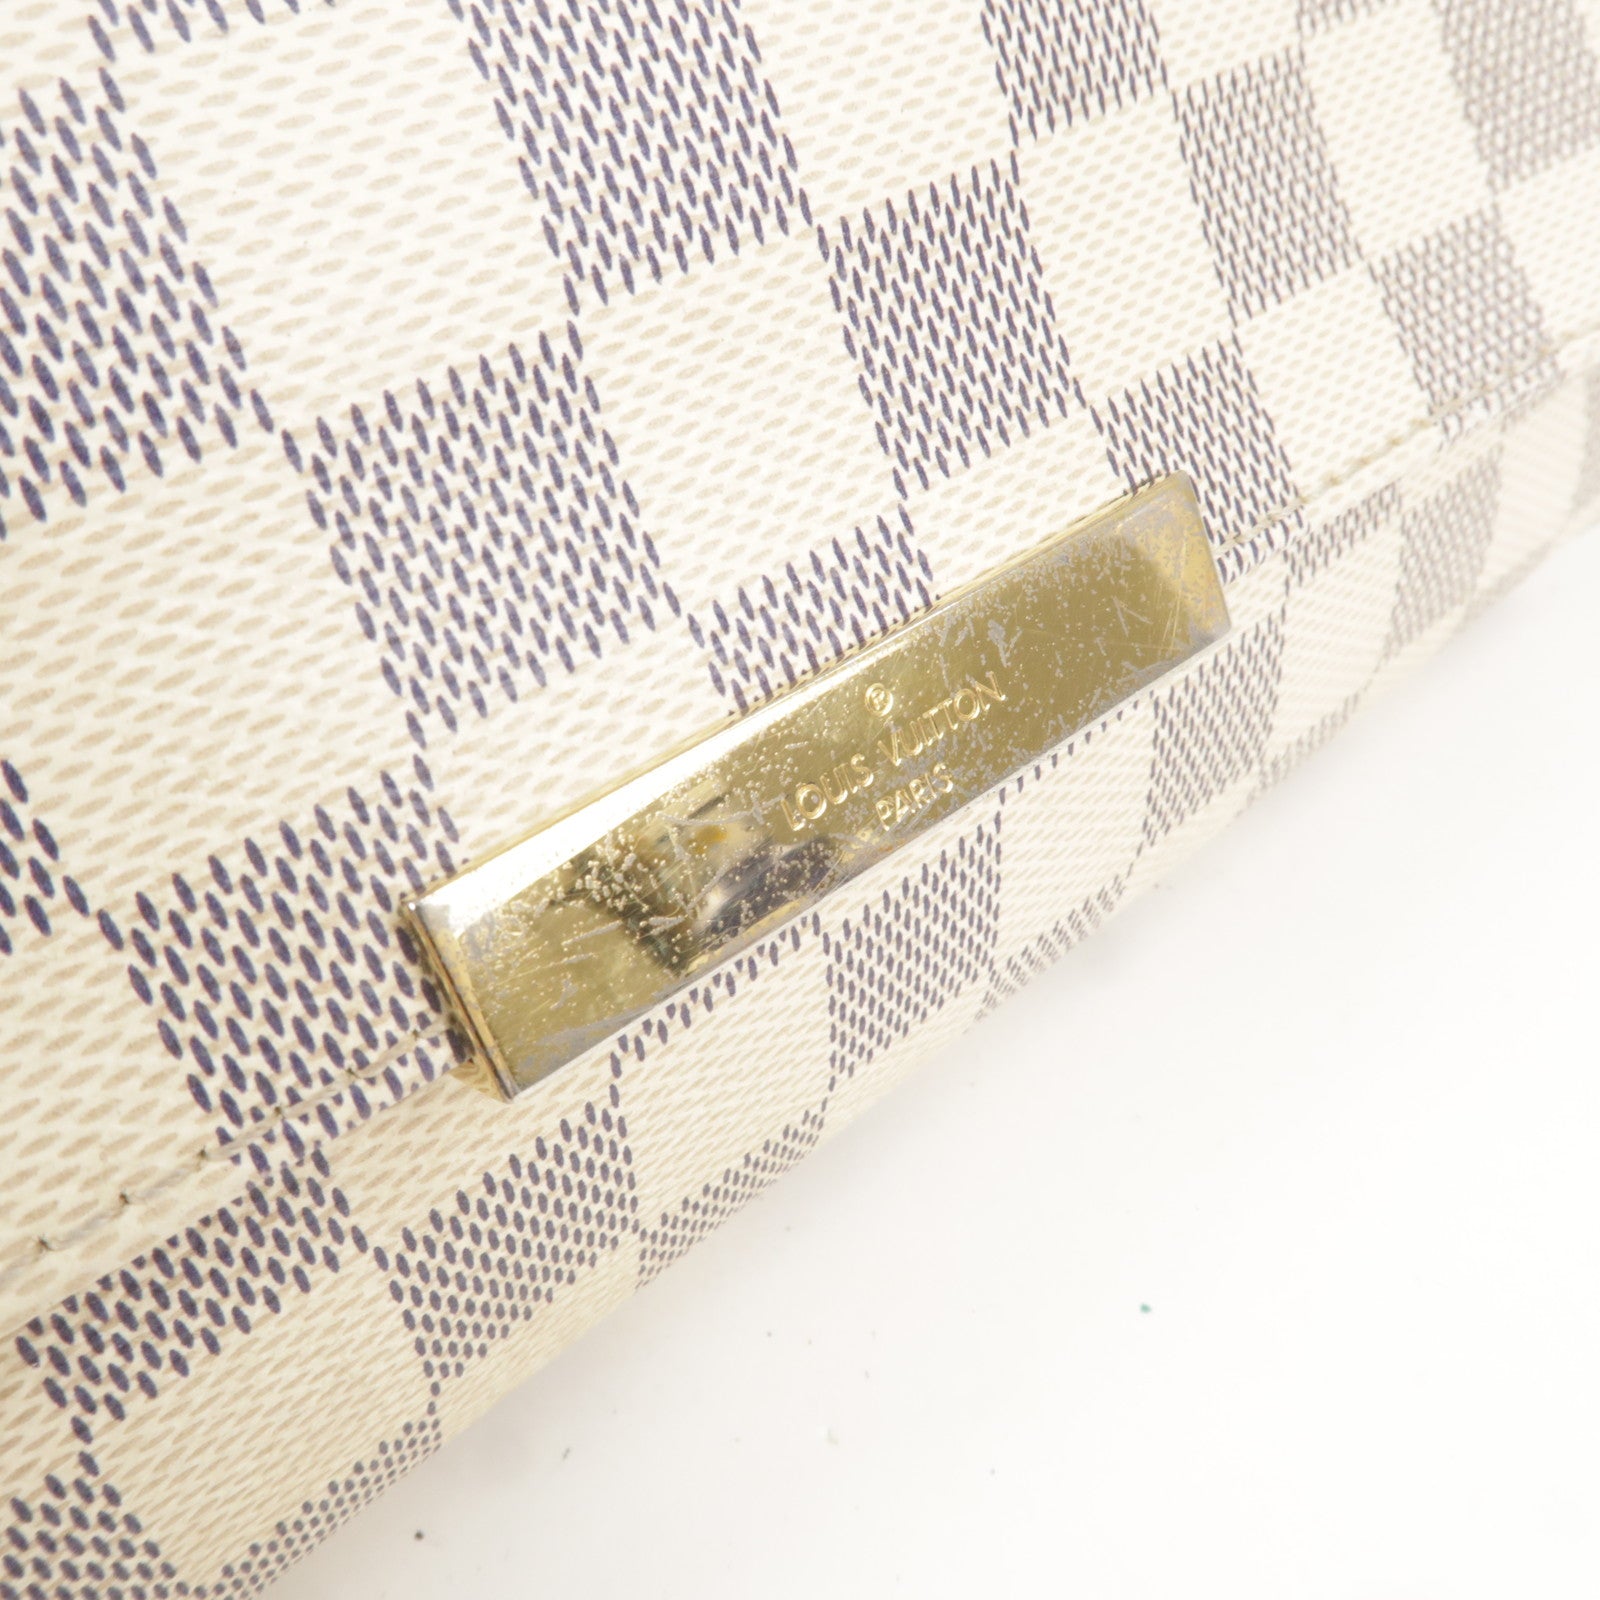 Louis-Vuitton-Damier-Azur-Favorite-MM-2Way-Bag-Hand-Bag-N41275